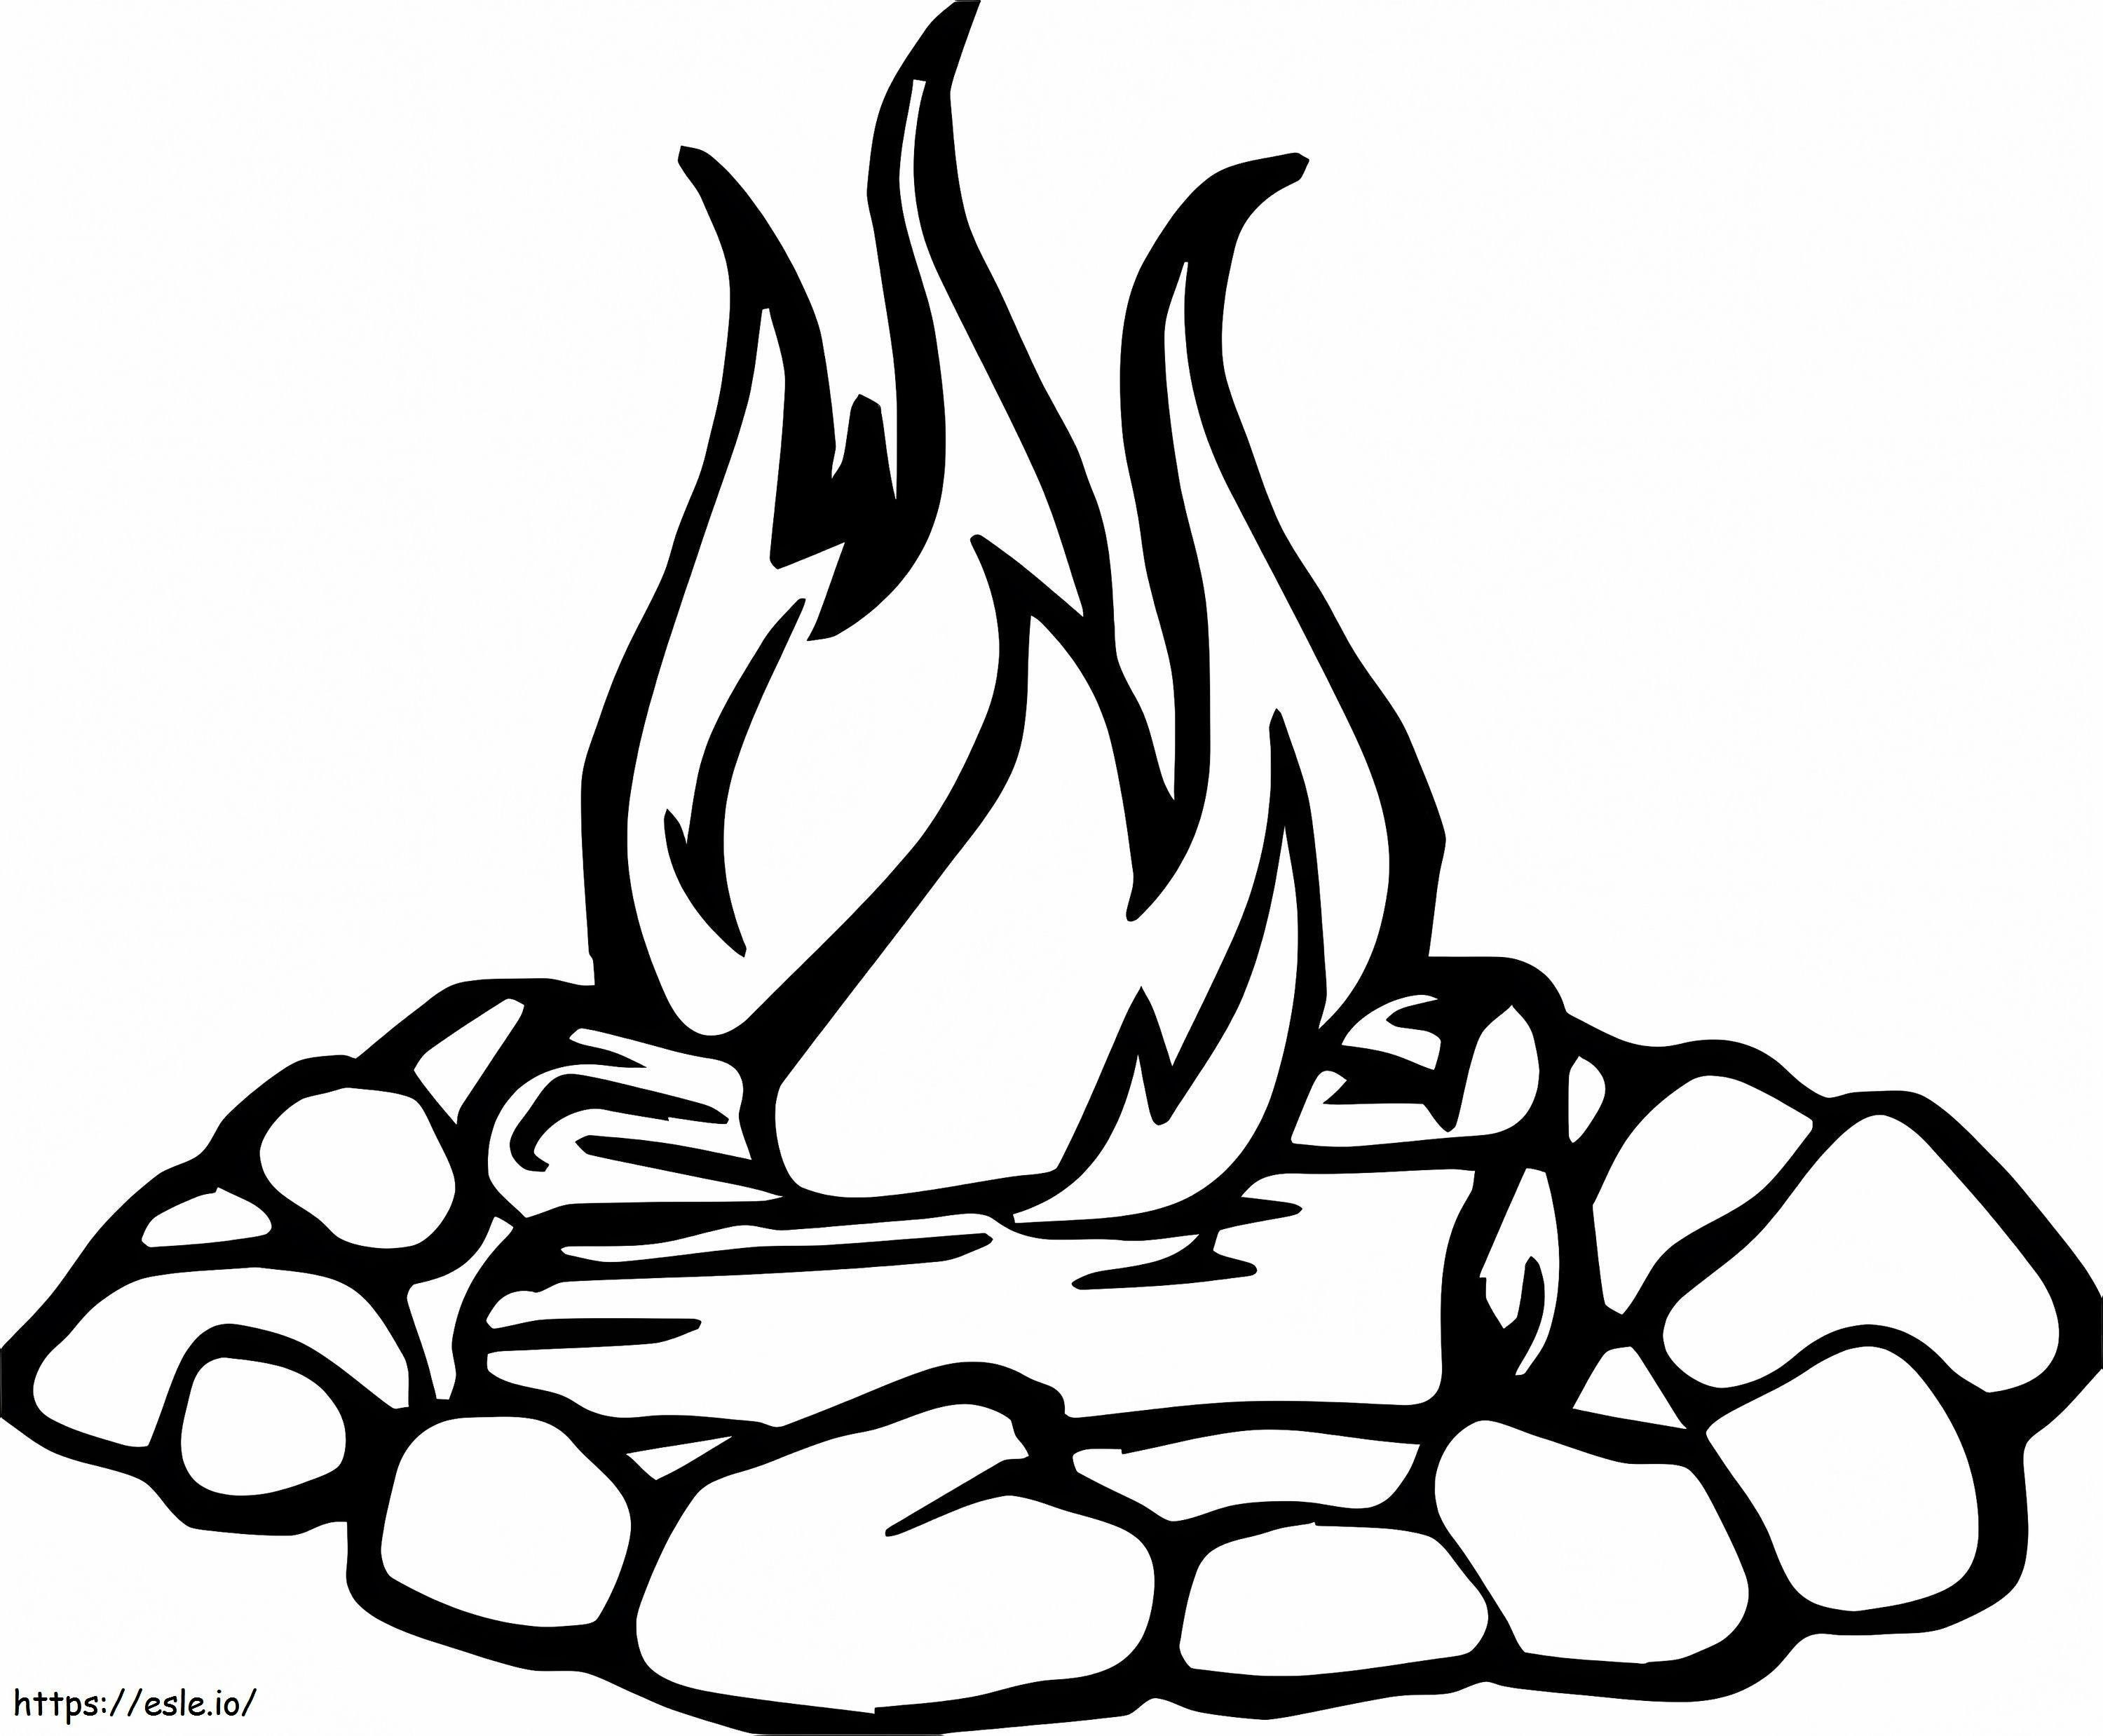 Easy Bonfire coloring page